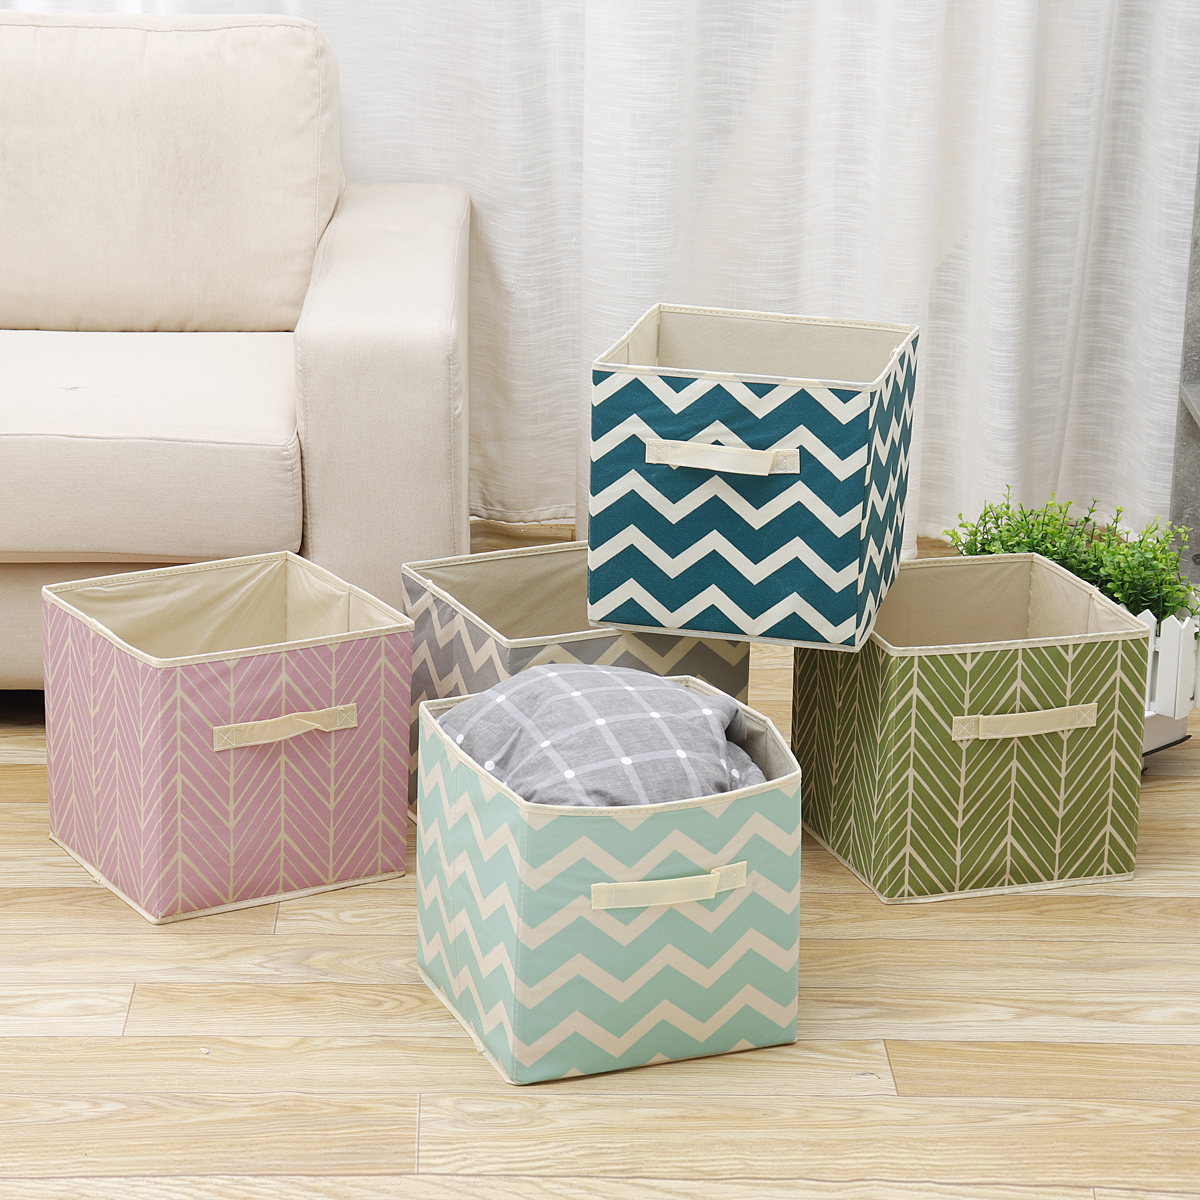 Foldable-Canvas-Storage-Box-Fabric-Cube-Cloth-Basket-Bag-Home-Cosmetic-Case-Basket-Desk-Organizer-Bi-1746401-23